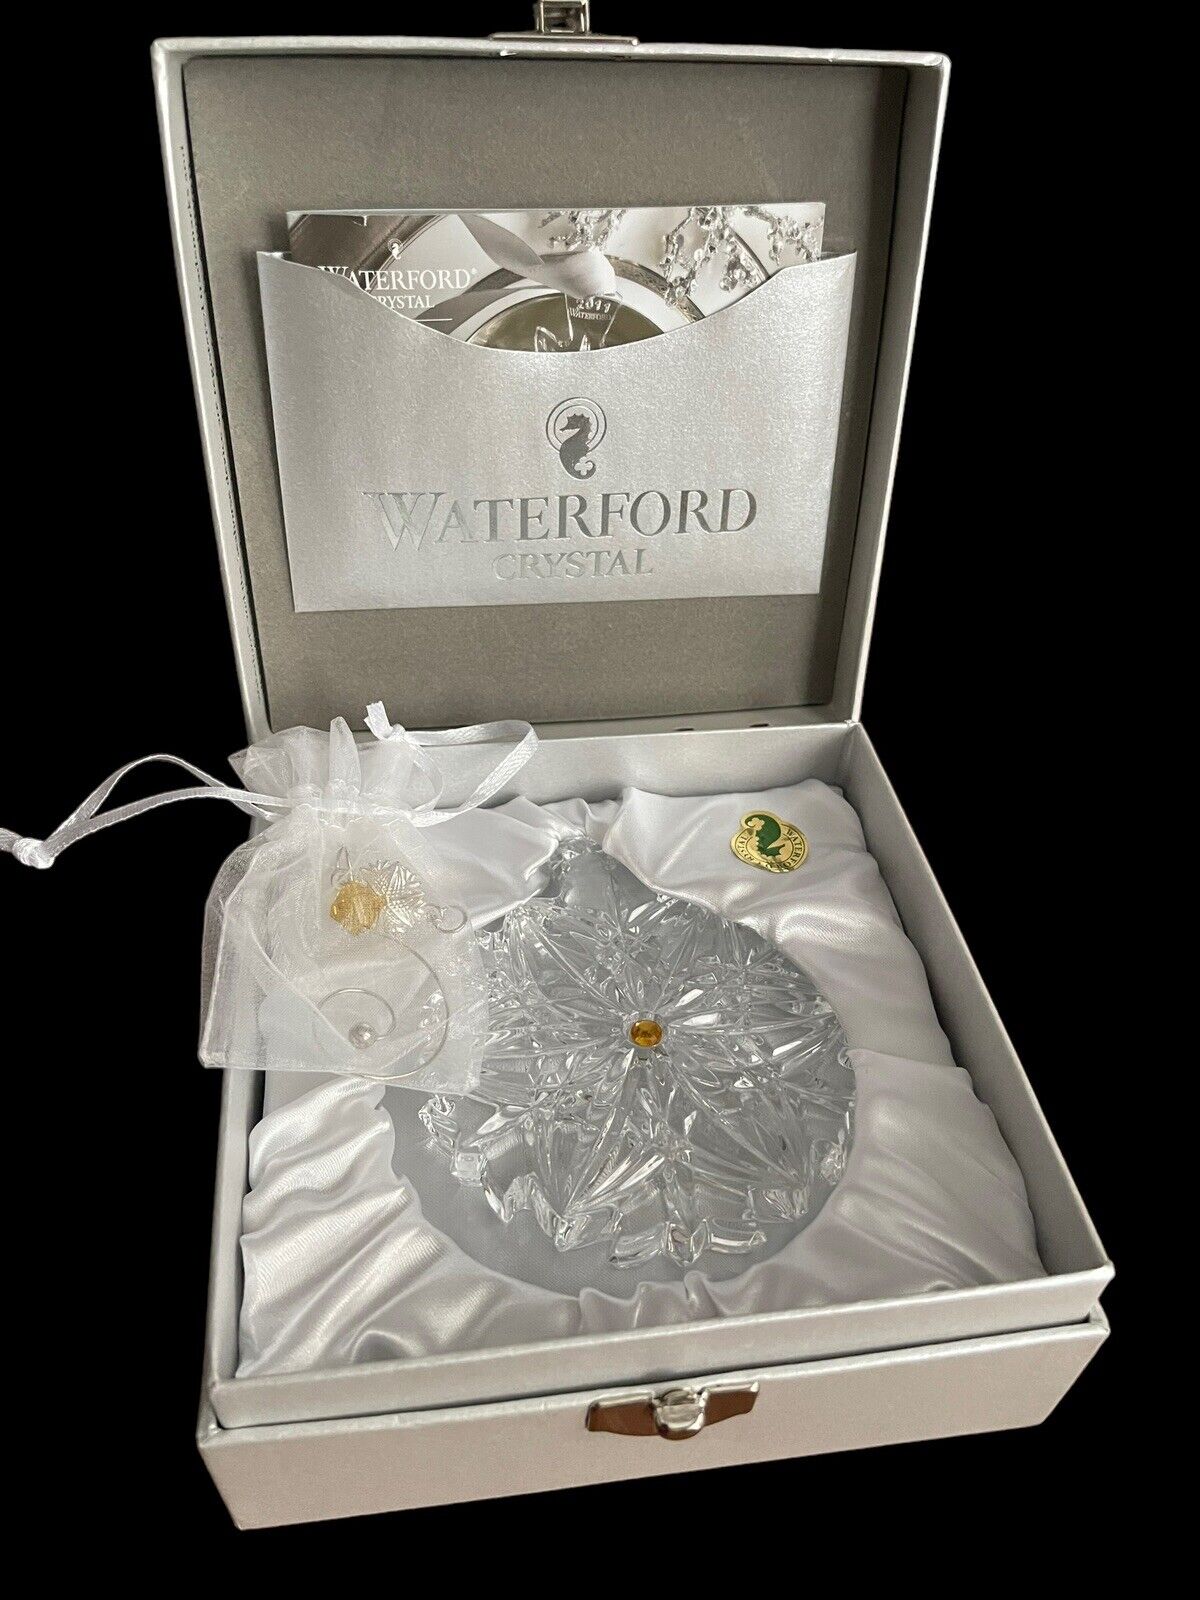 NIB Waterford Crystal Snowflake Wishes 2014 Peace Ornament W/ Enhancer 154682